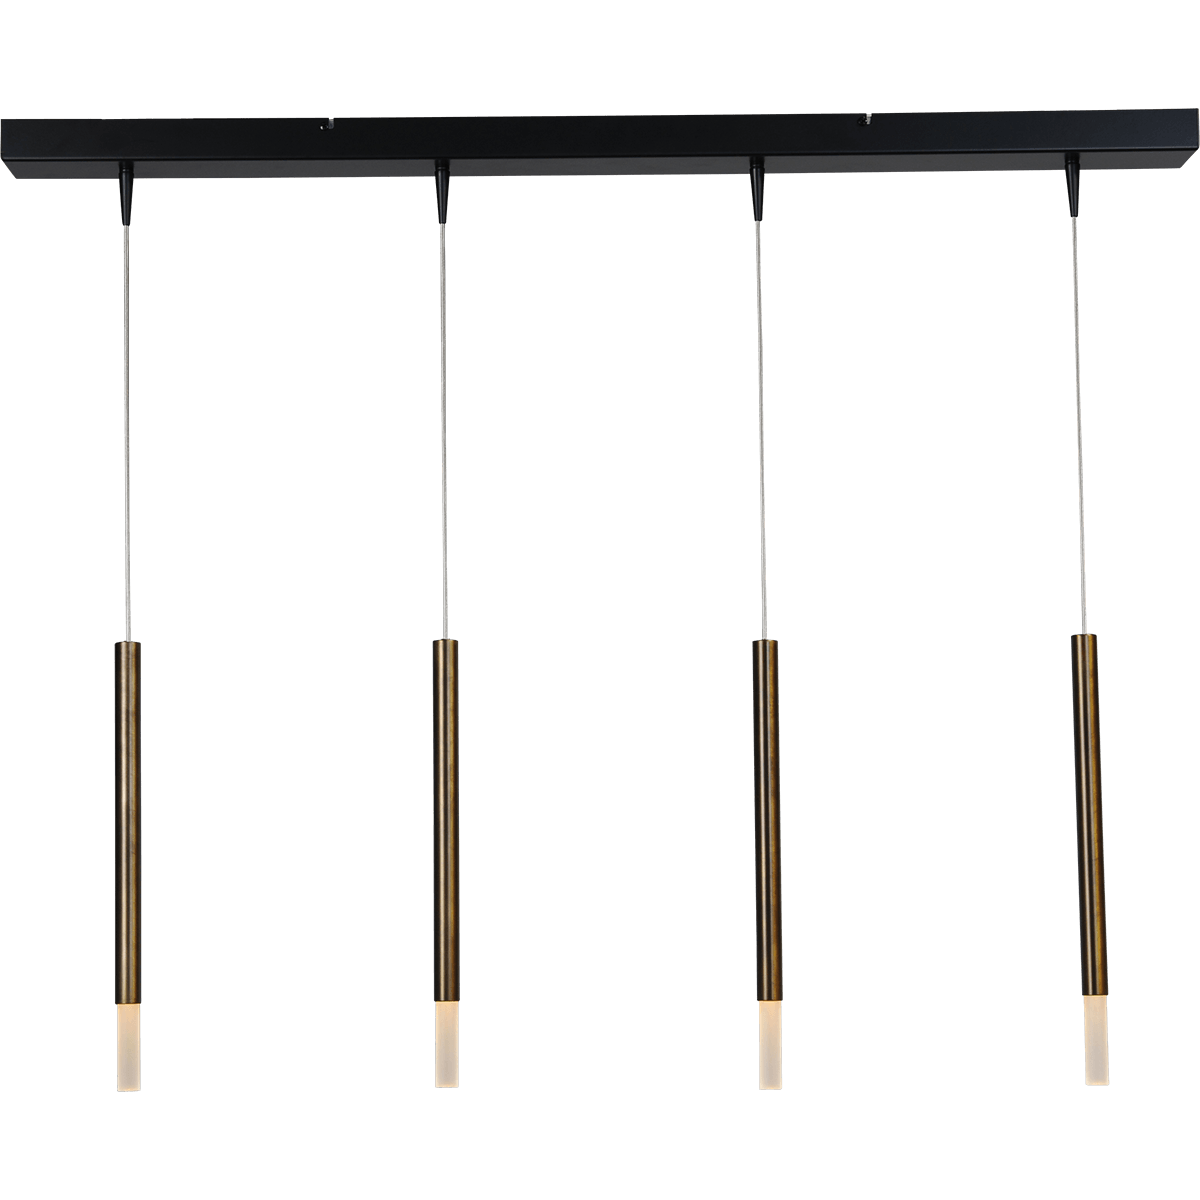 Hanglamp Flute 4-lichts zwart/antiek messing 100x8cm